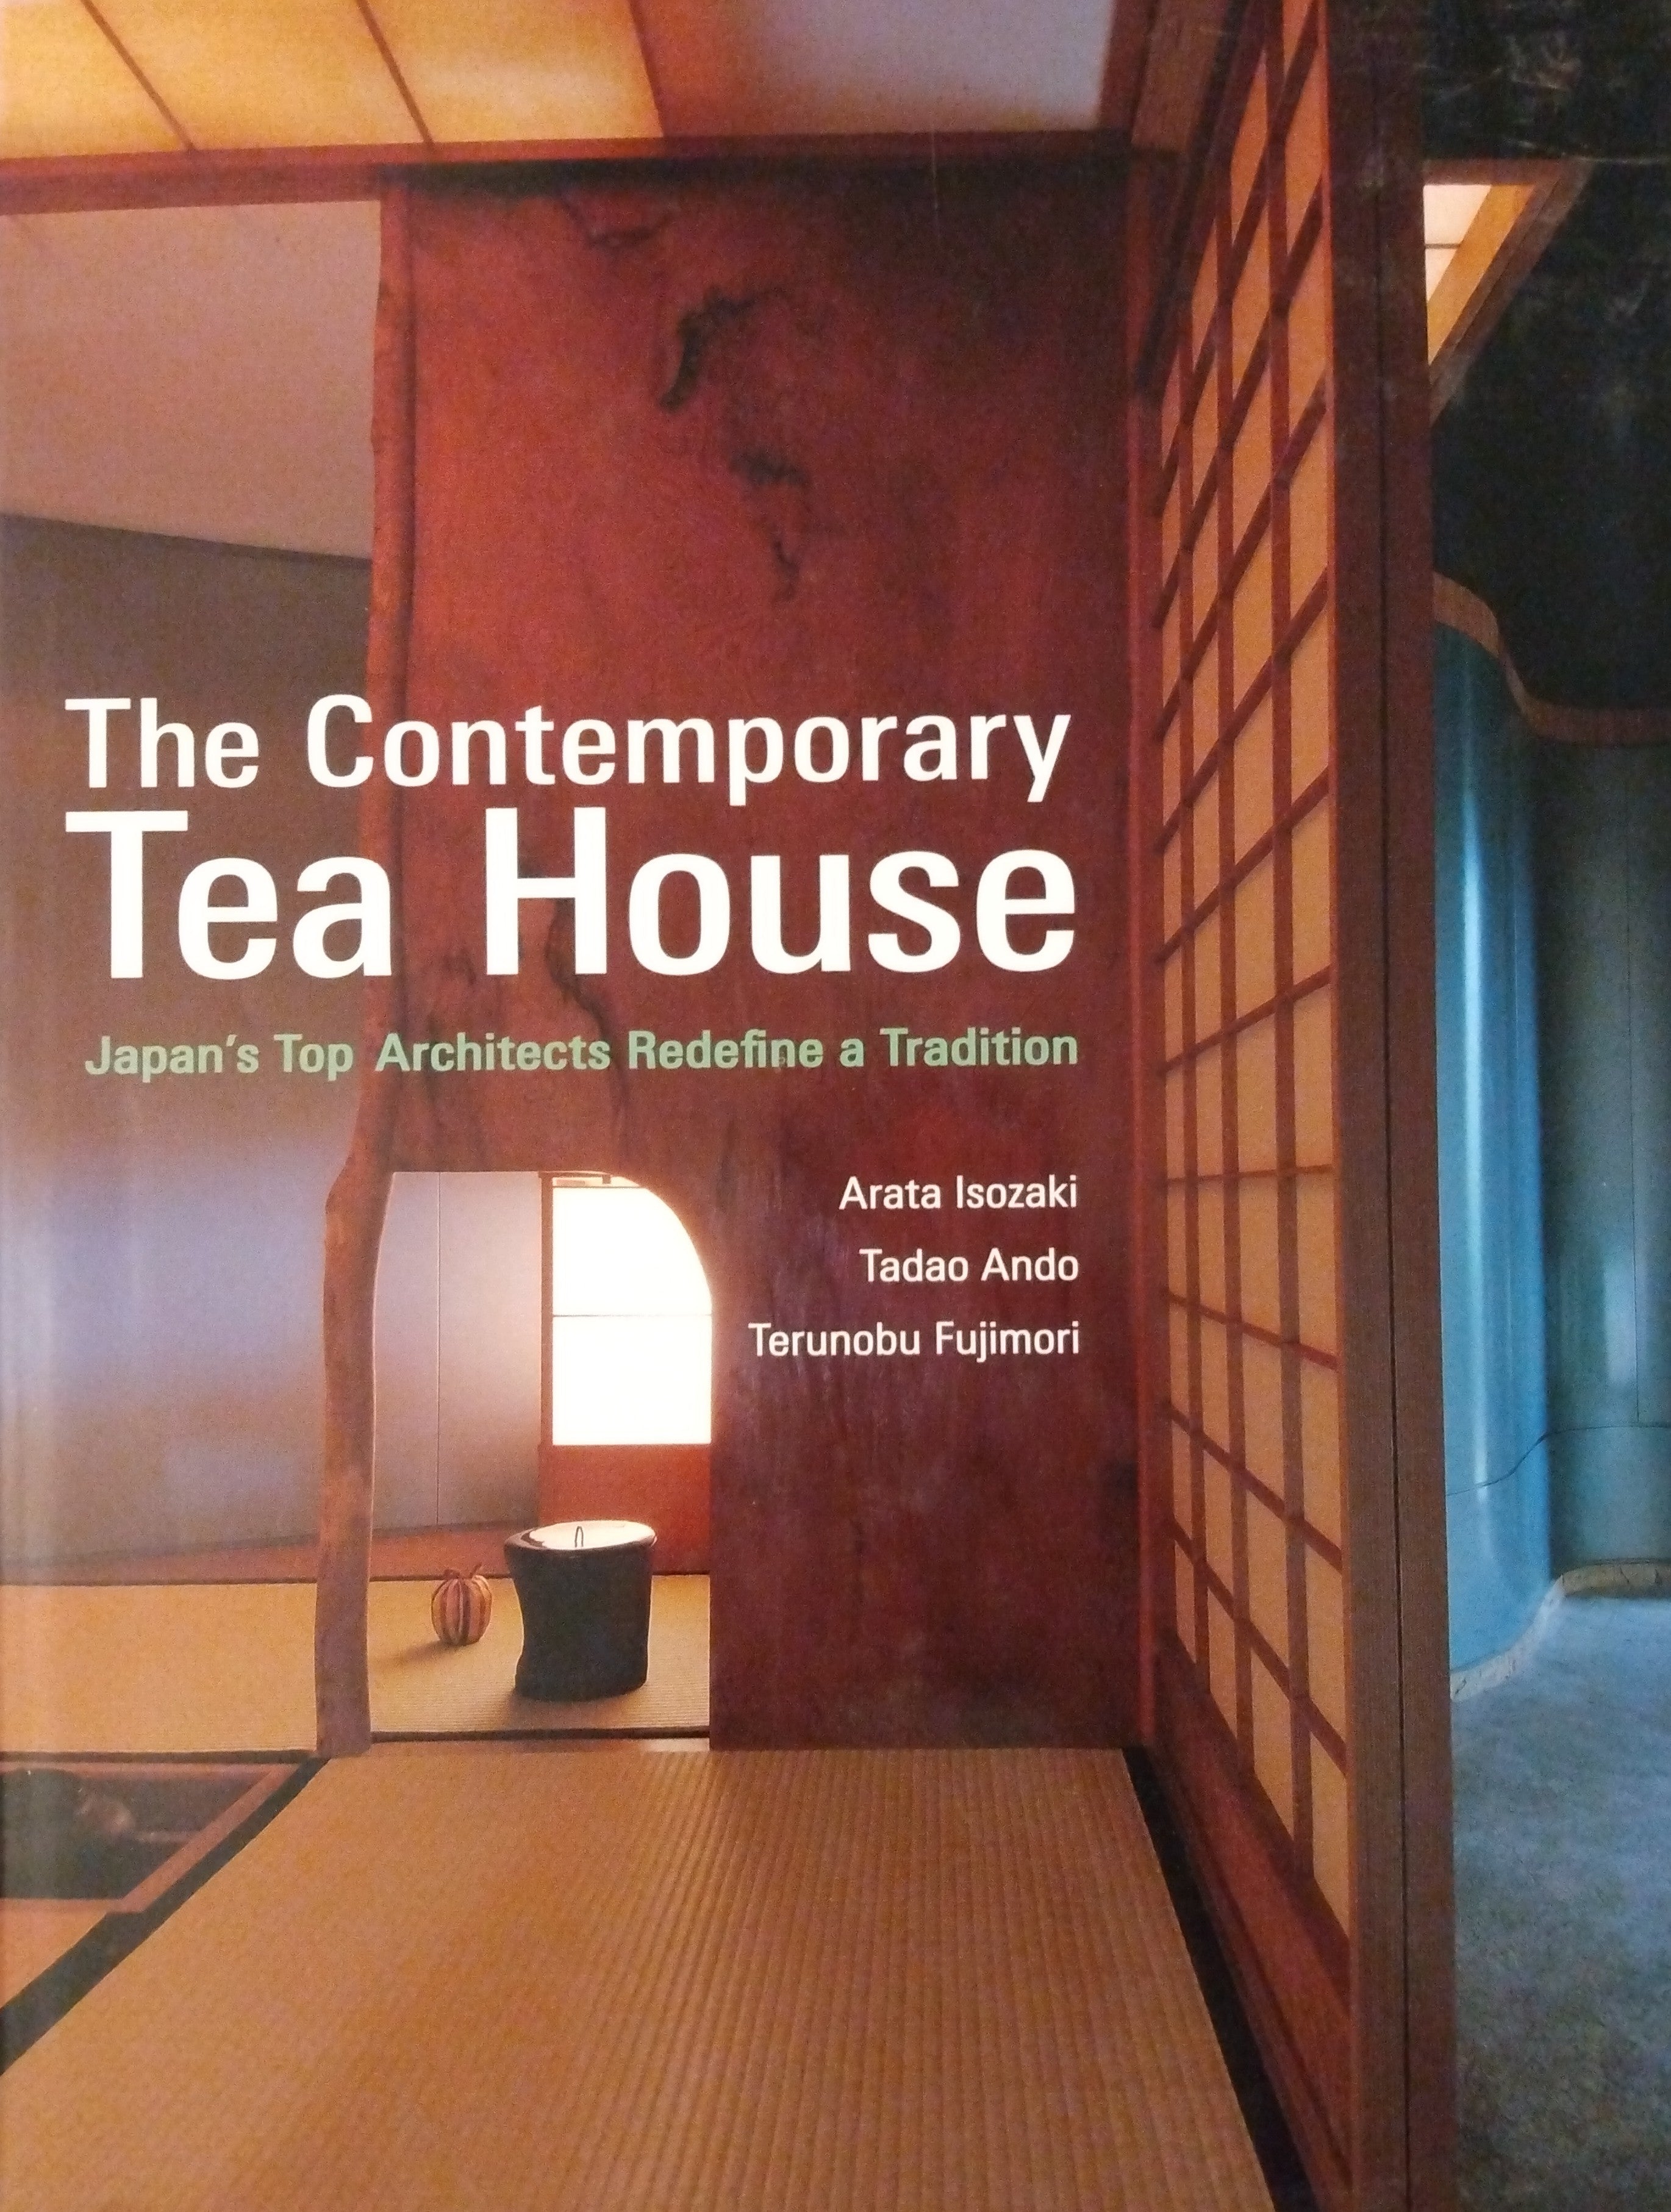 "The Contermporary Tea House", by Arata Isozaki, Tadao Ando, Terunobu Fujimori; Thiel Collection